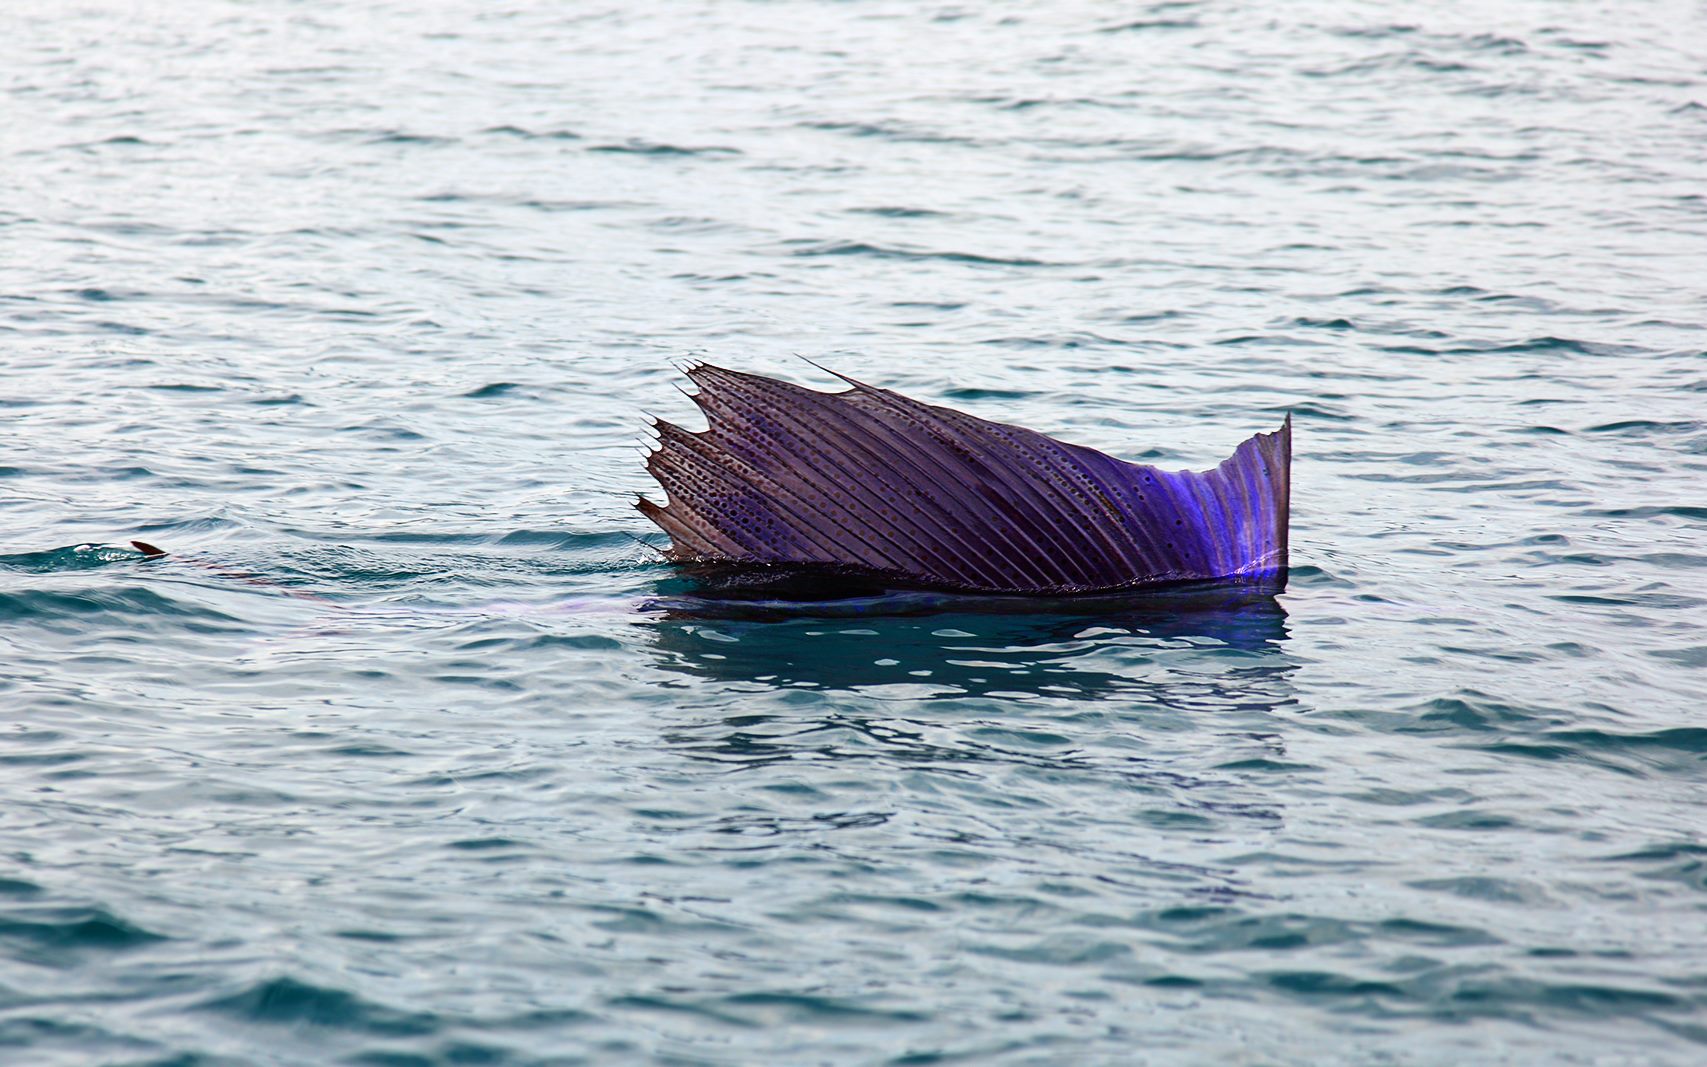 Индо-тихоокеанский парусник: самая быстрая рыба